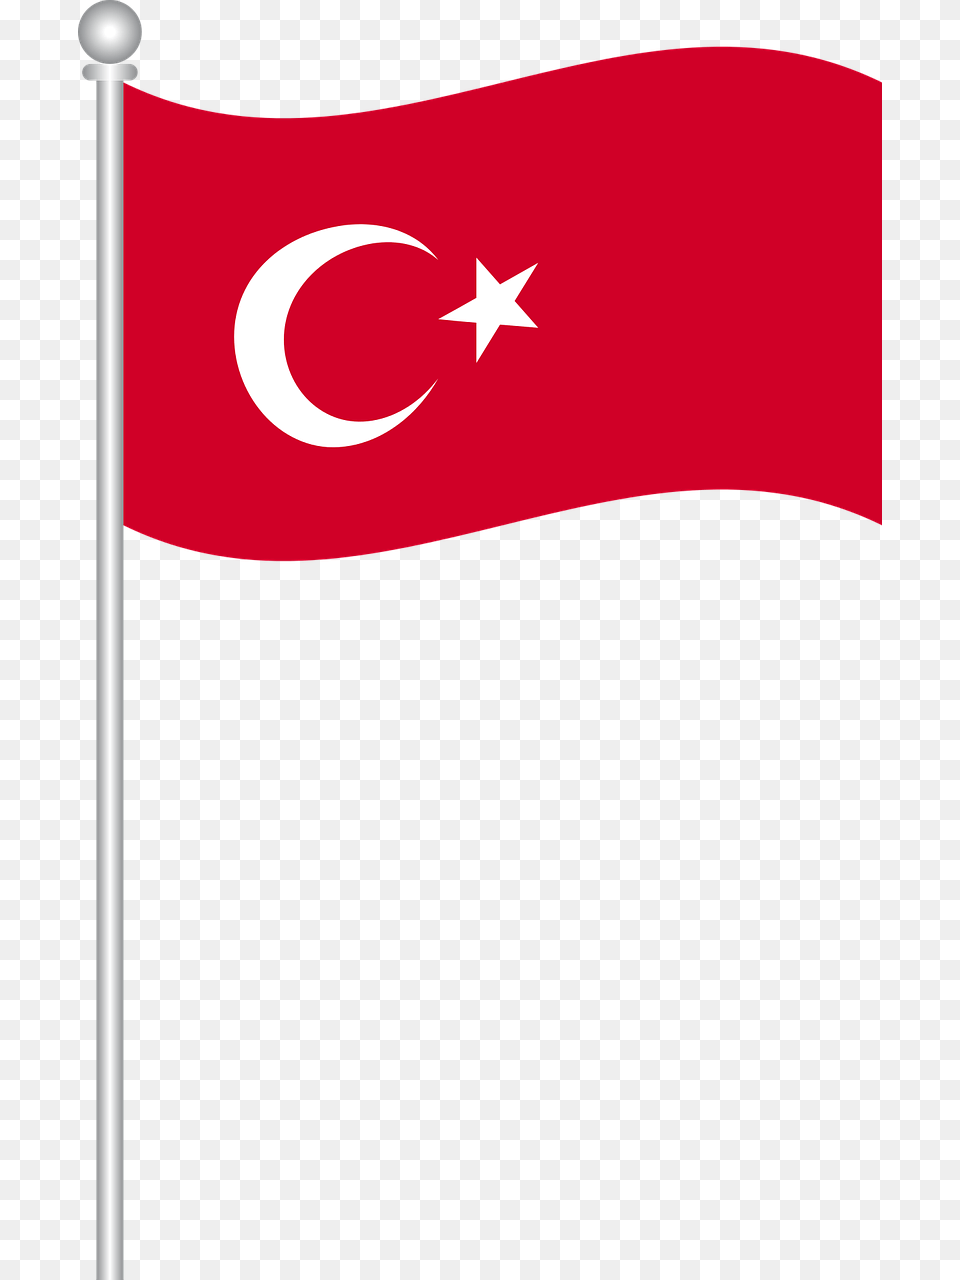 Turkish Flag Clipart, Turkey Flag Png Image